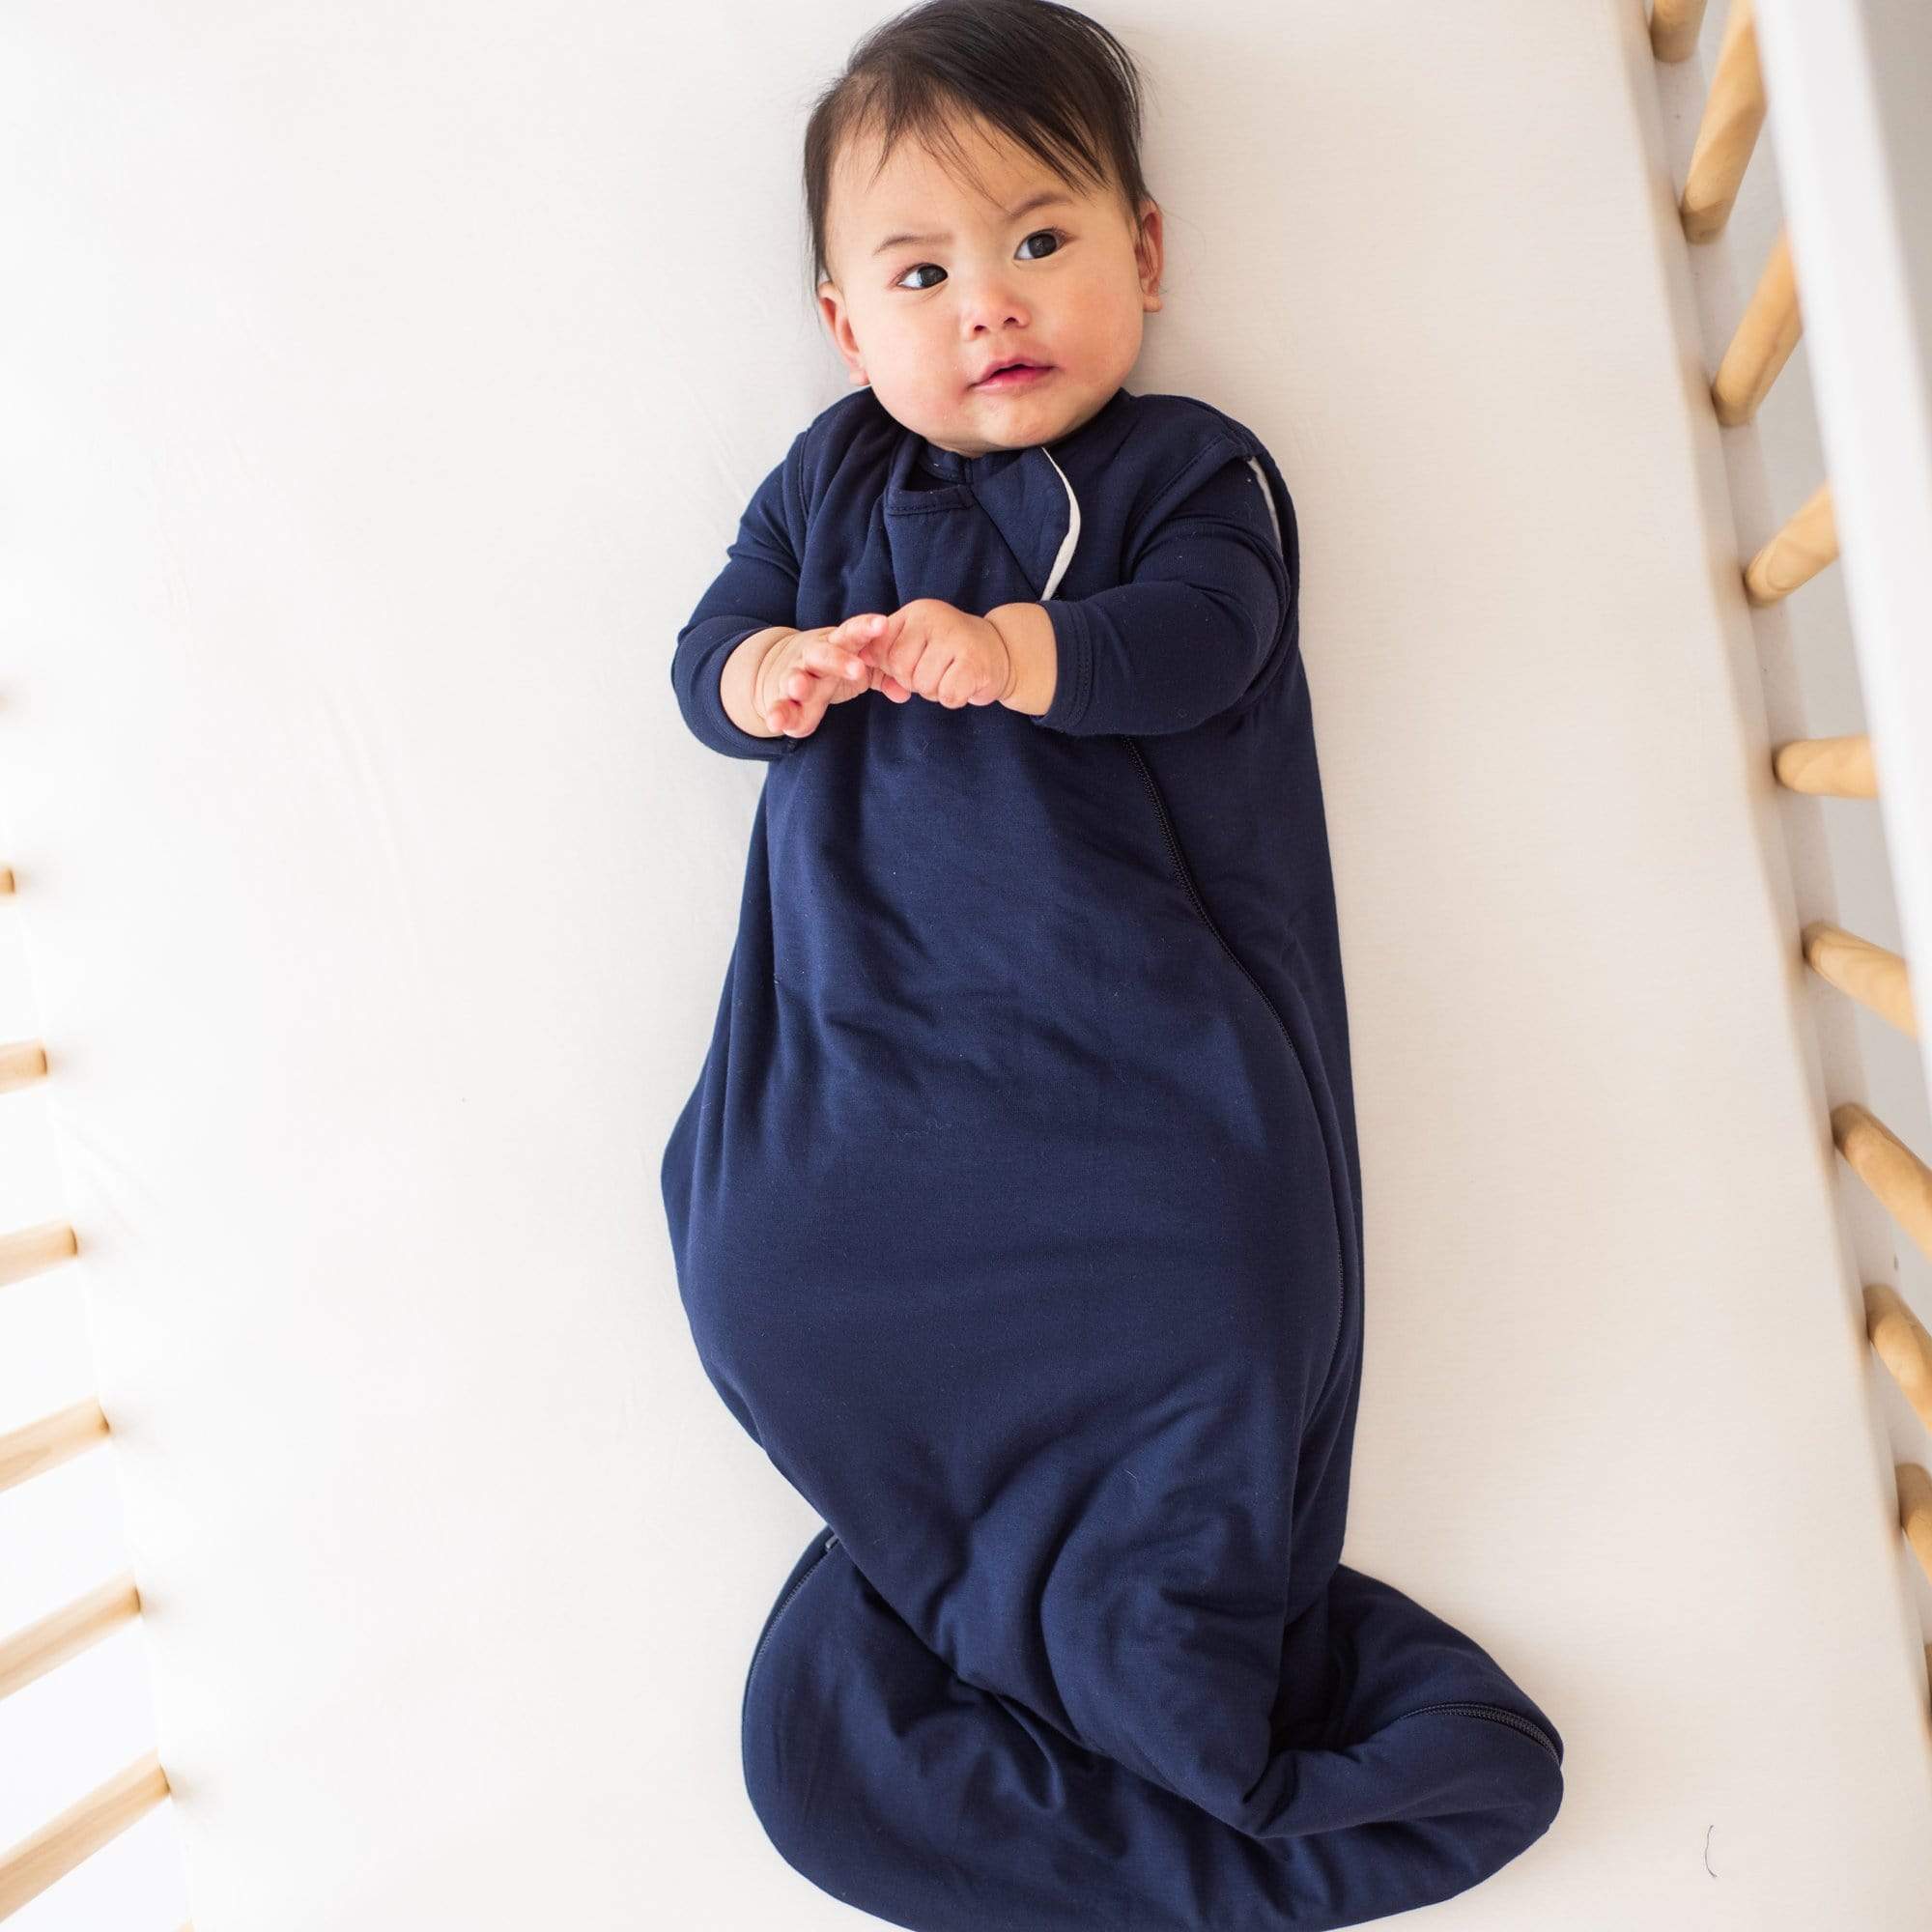 Baby wearing Kyte Baby bamboo Sleep Bag in Navy 2.5